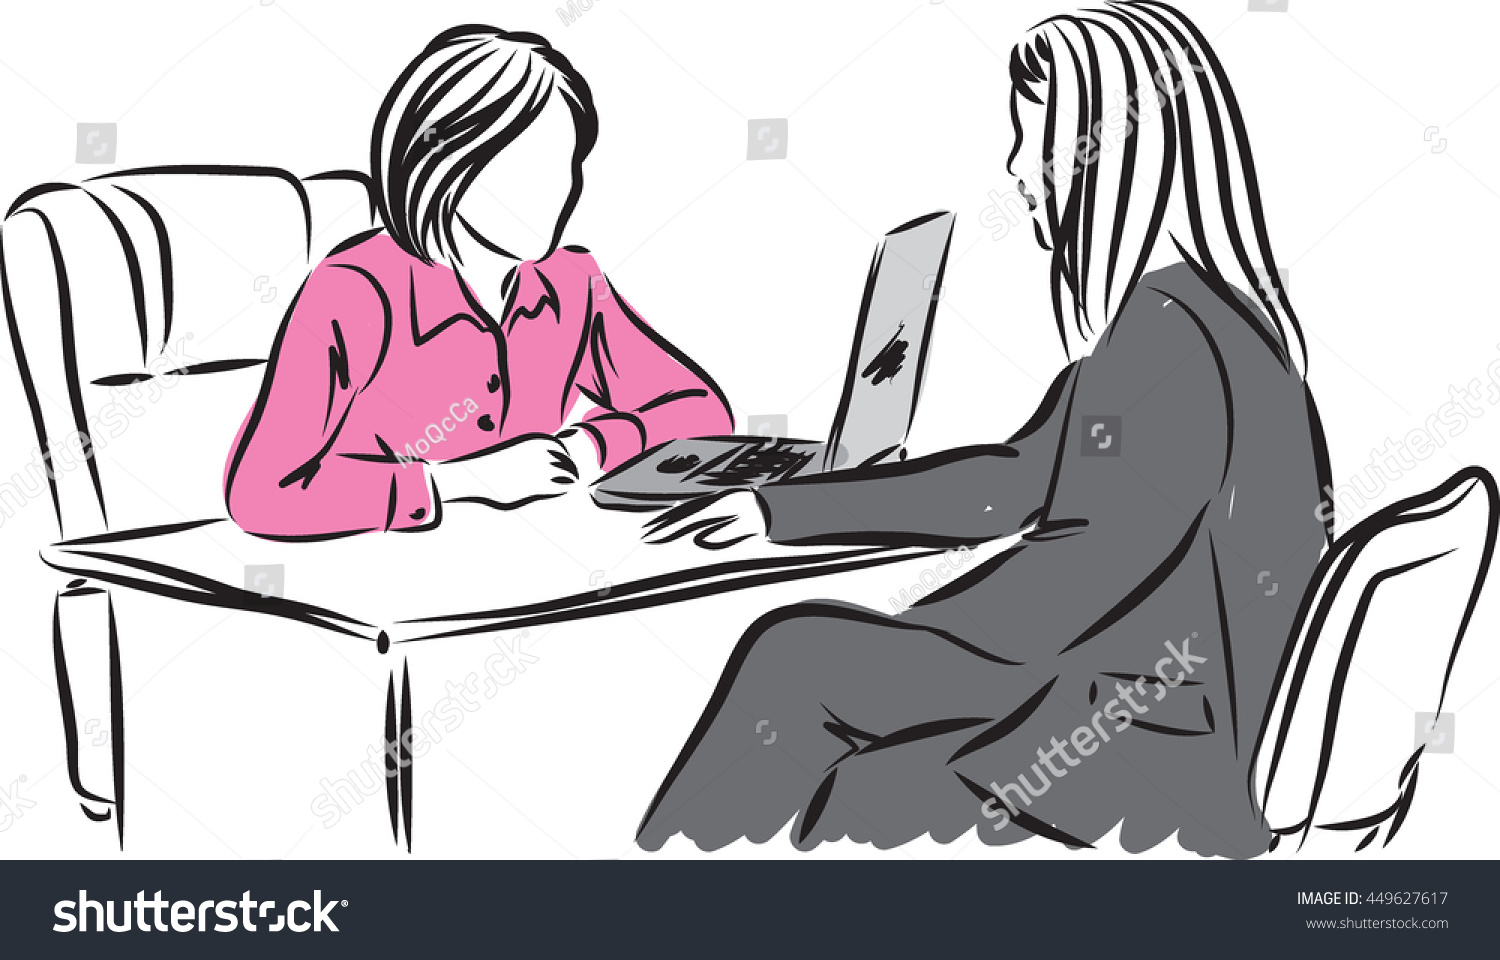 Woman Job Interview Illustration Stock Vector 449627617 Shutterstock